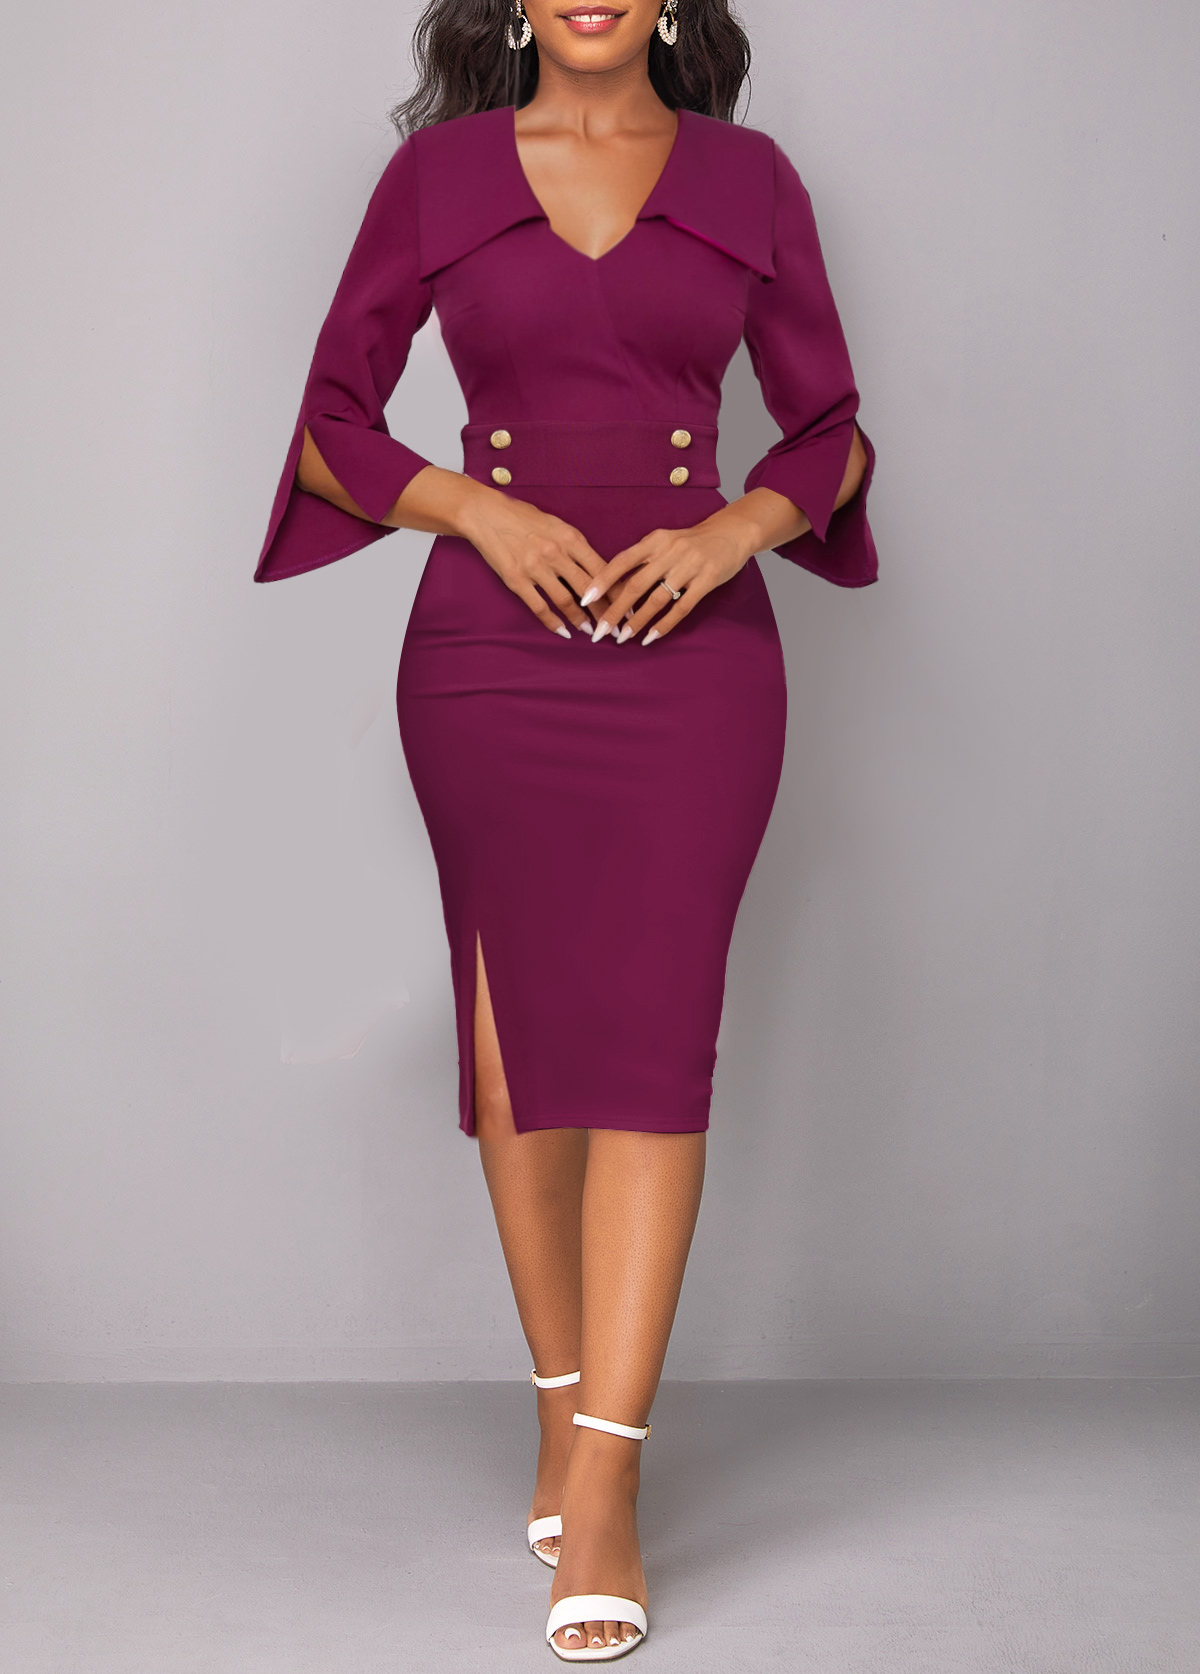 Split Dark Reddish Purple Button Bodycon Dress | Rosewe.com - USD $18.98